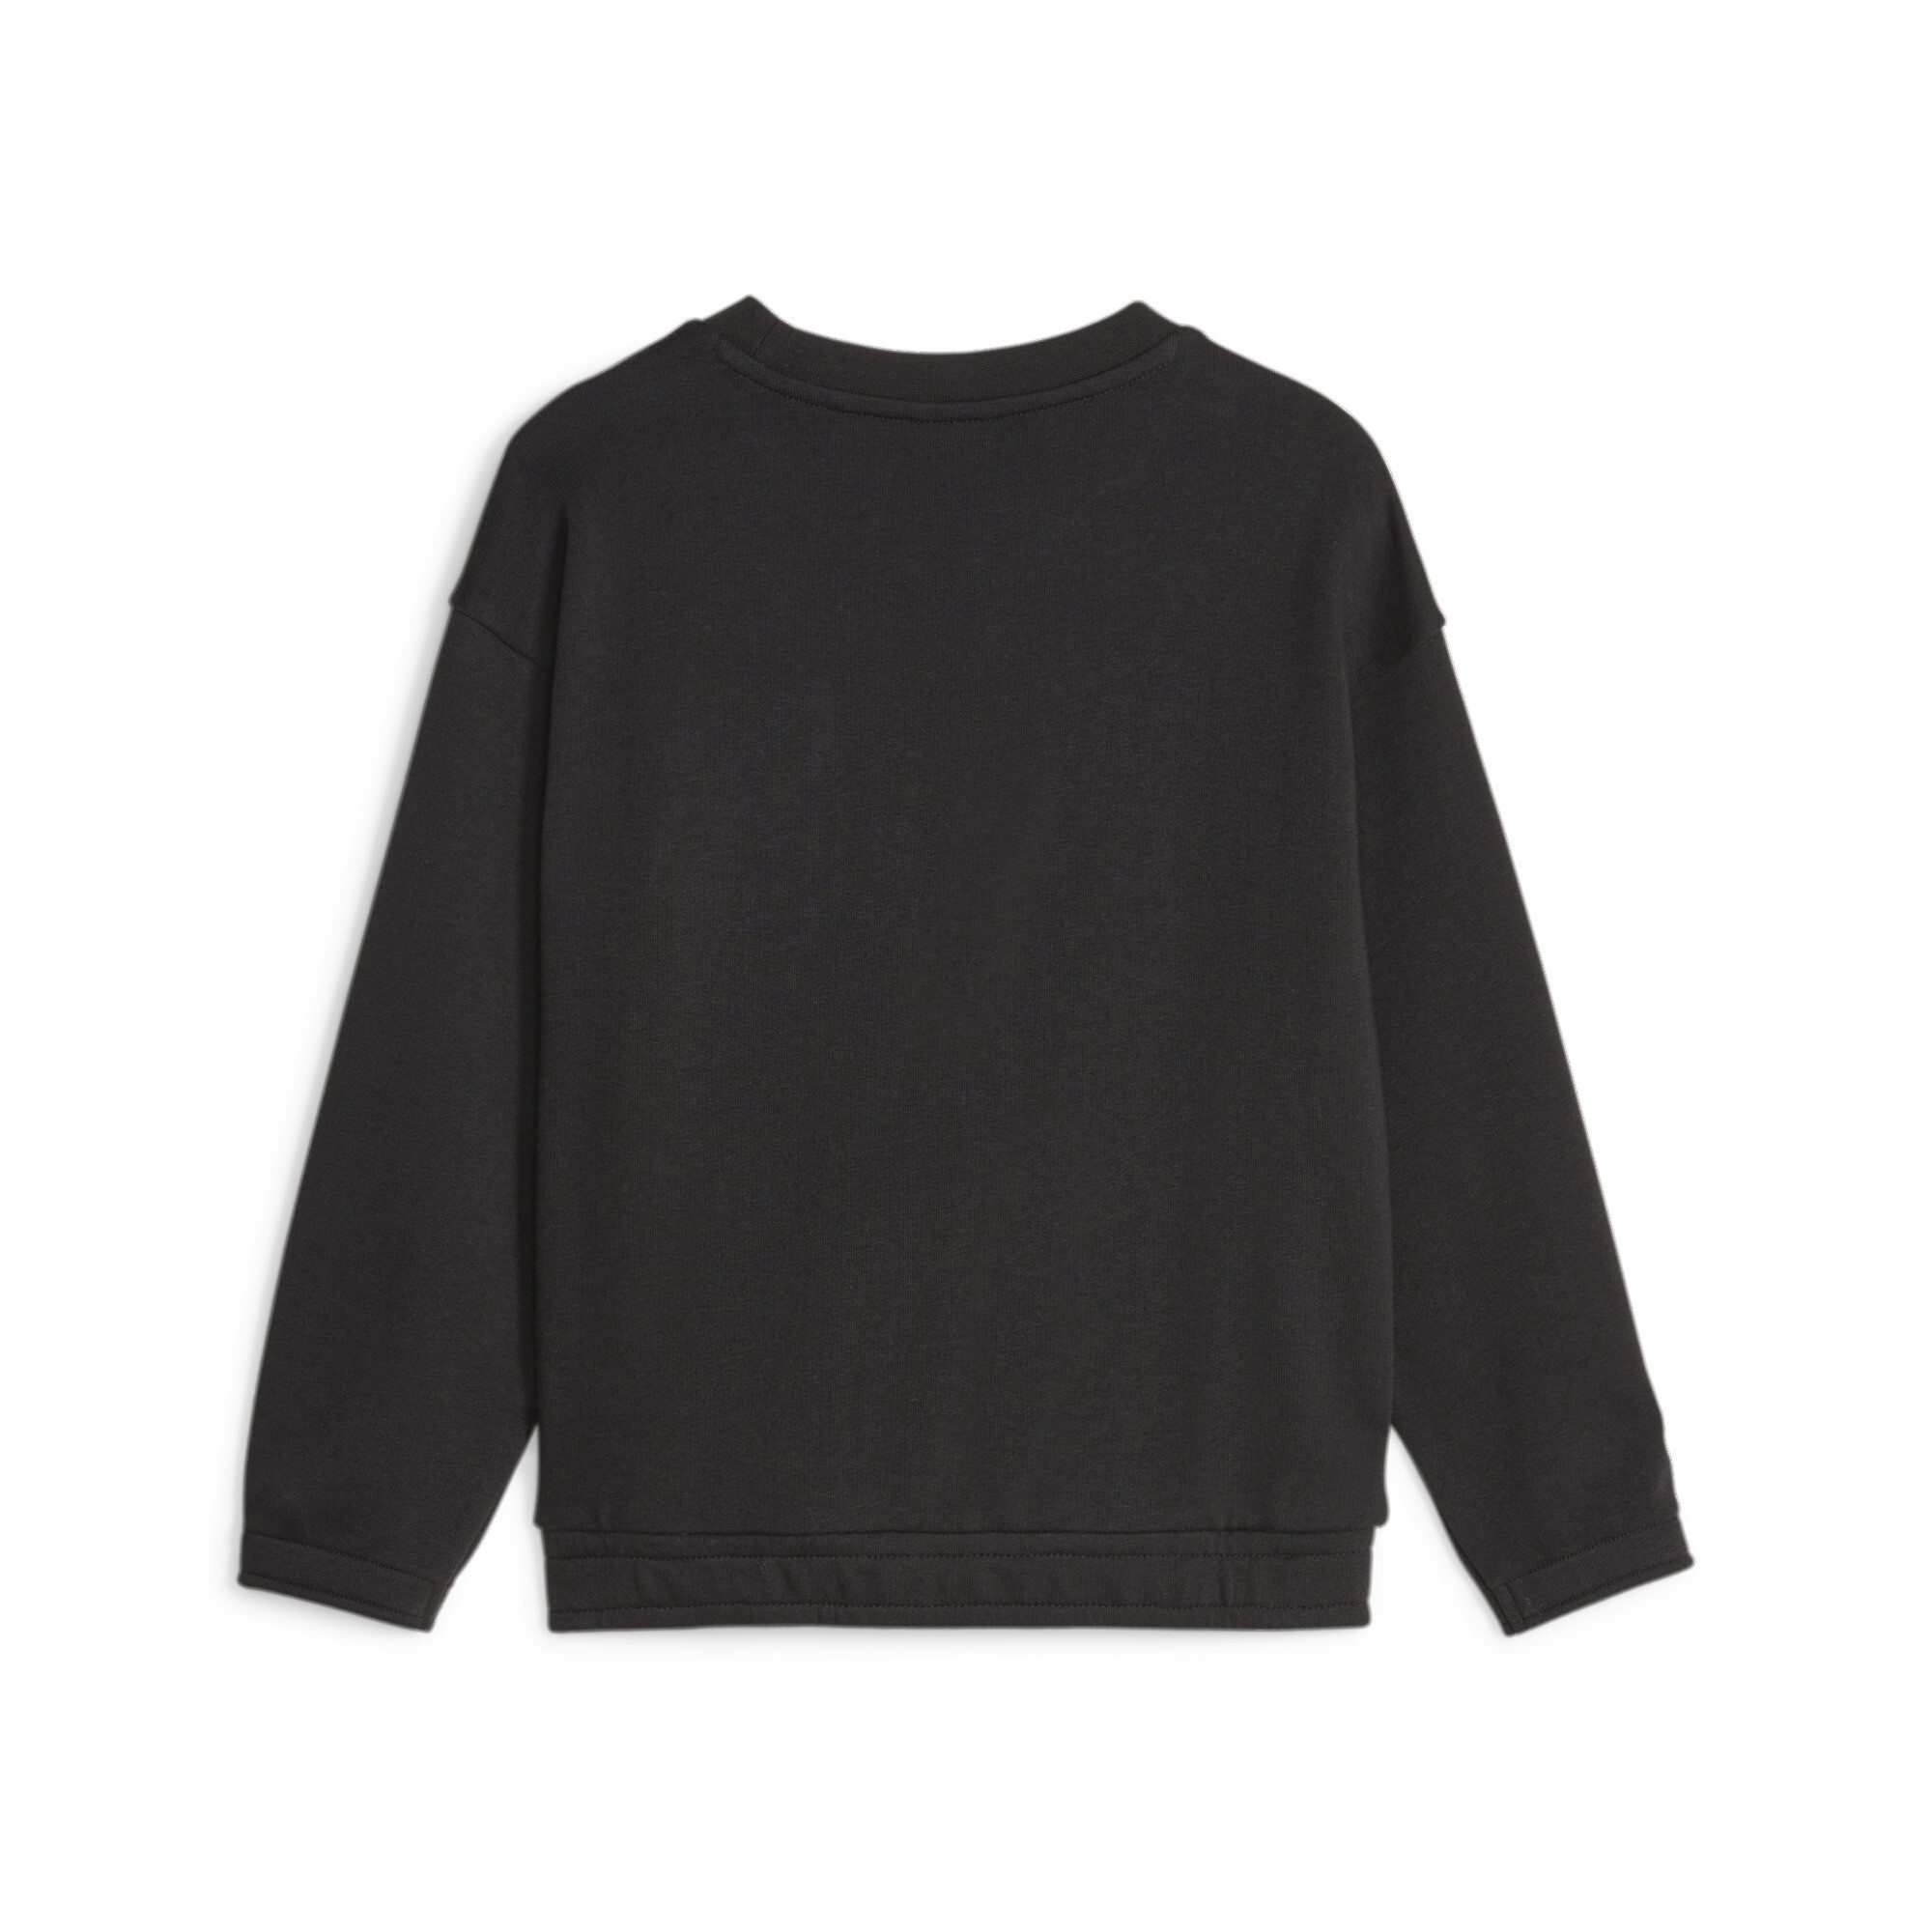 PUMA Classics Mix Match Sweatshirt In Black, Size 1-2 Youth